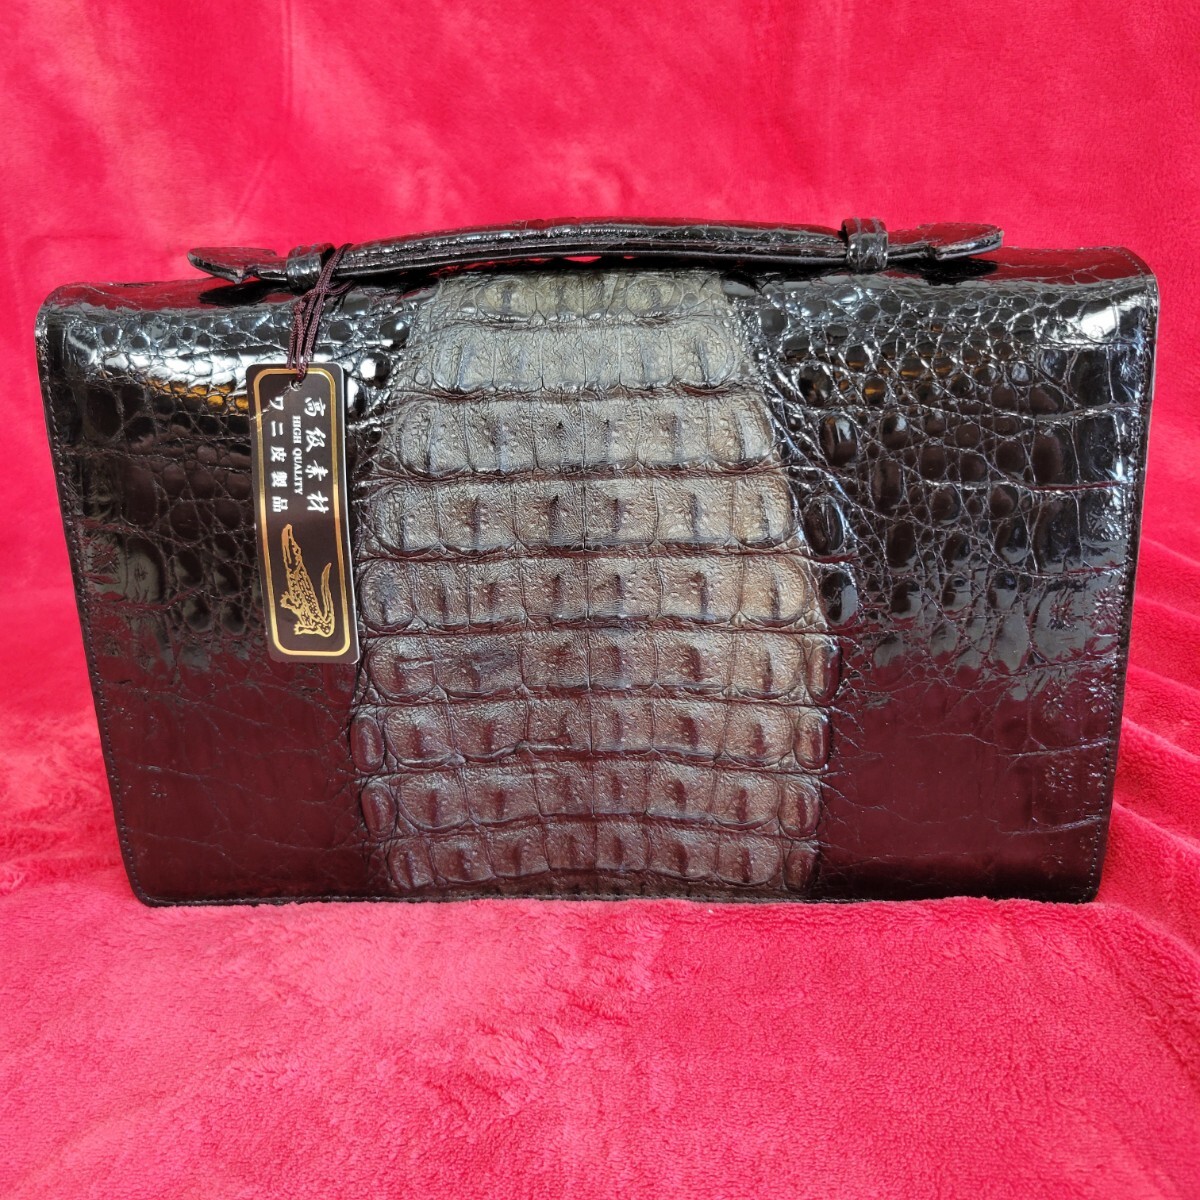 GENUINE CROCODILE SKIN unused goods high class material wani leather product crocodile shining . handbag second bag clutch bag 